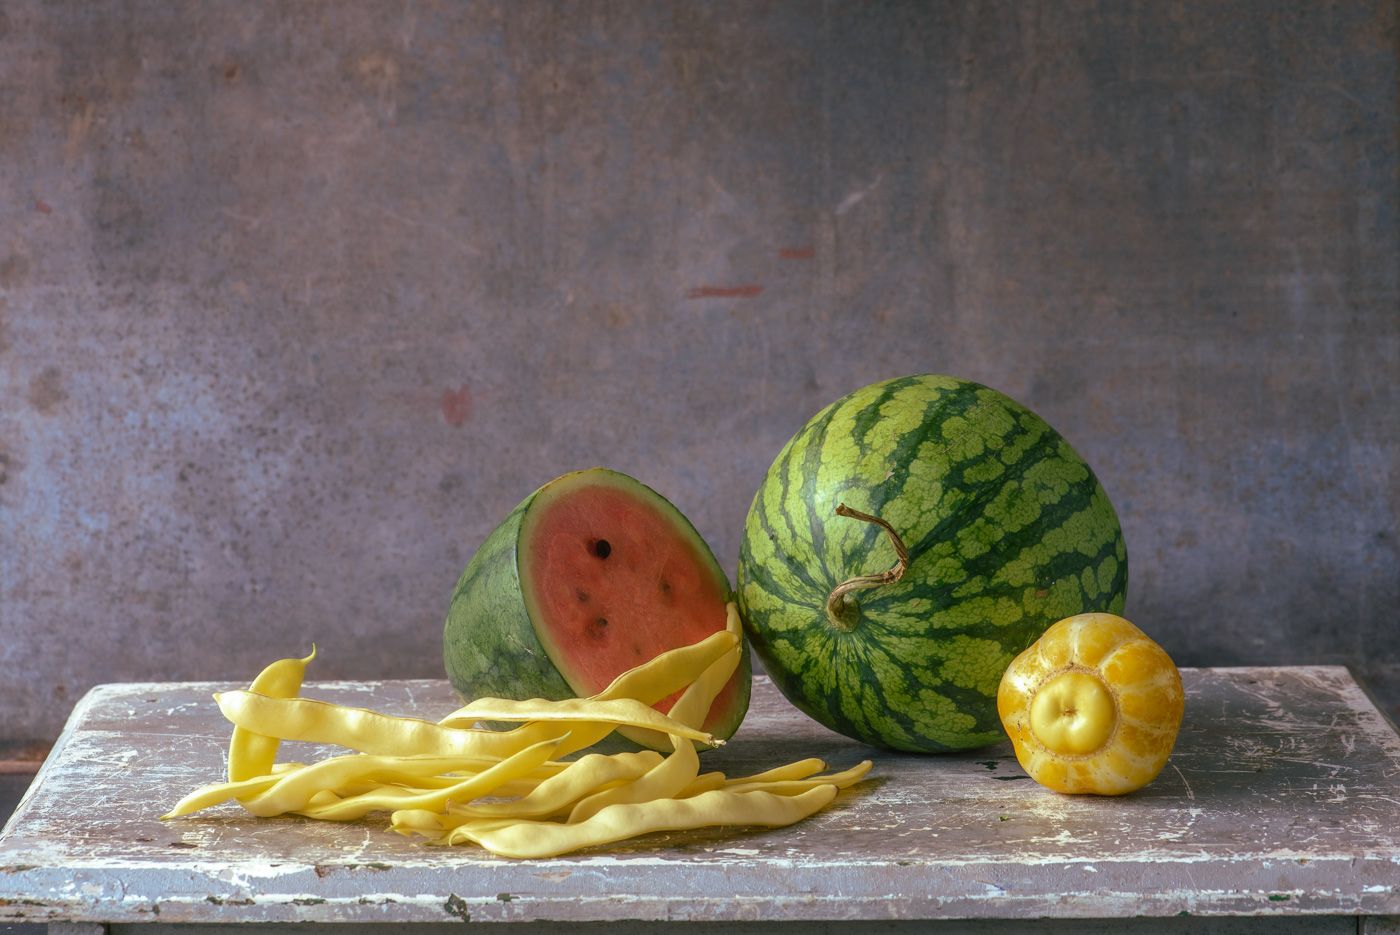 Lynn karlin_Watermelon Still Life with Lemon Cucumber & Beans-8.jpg